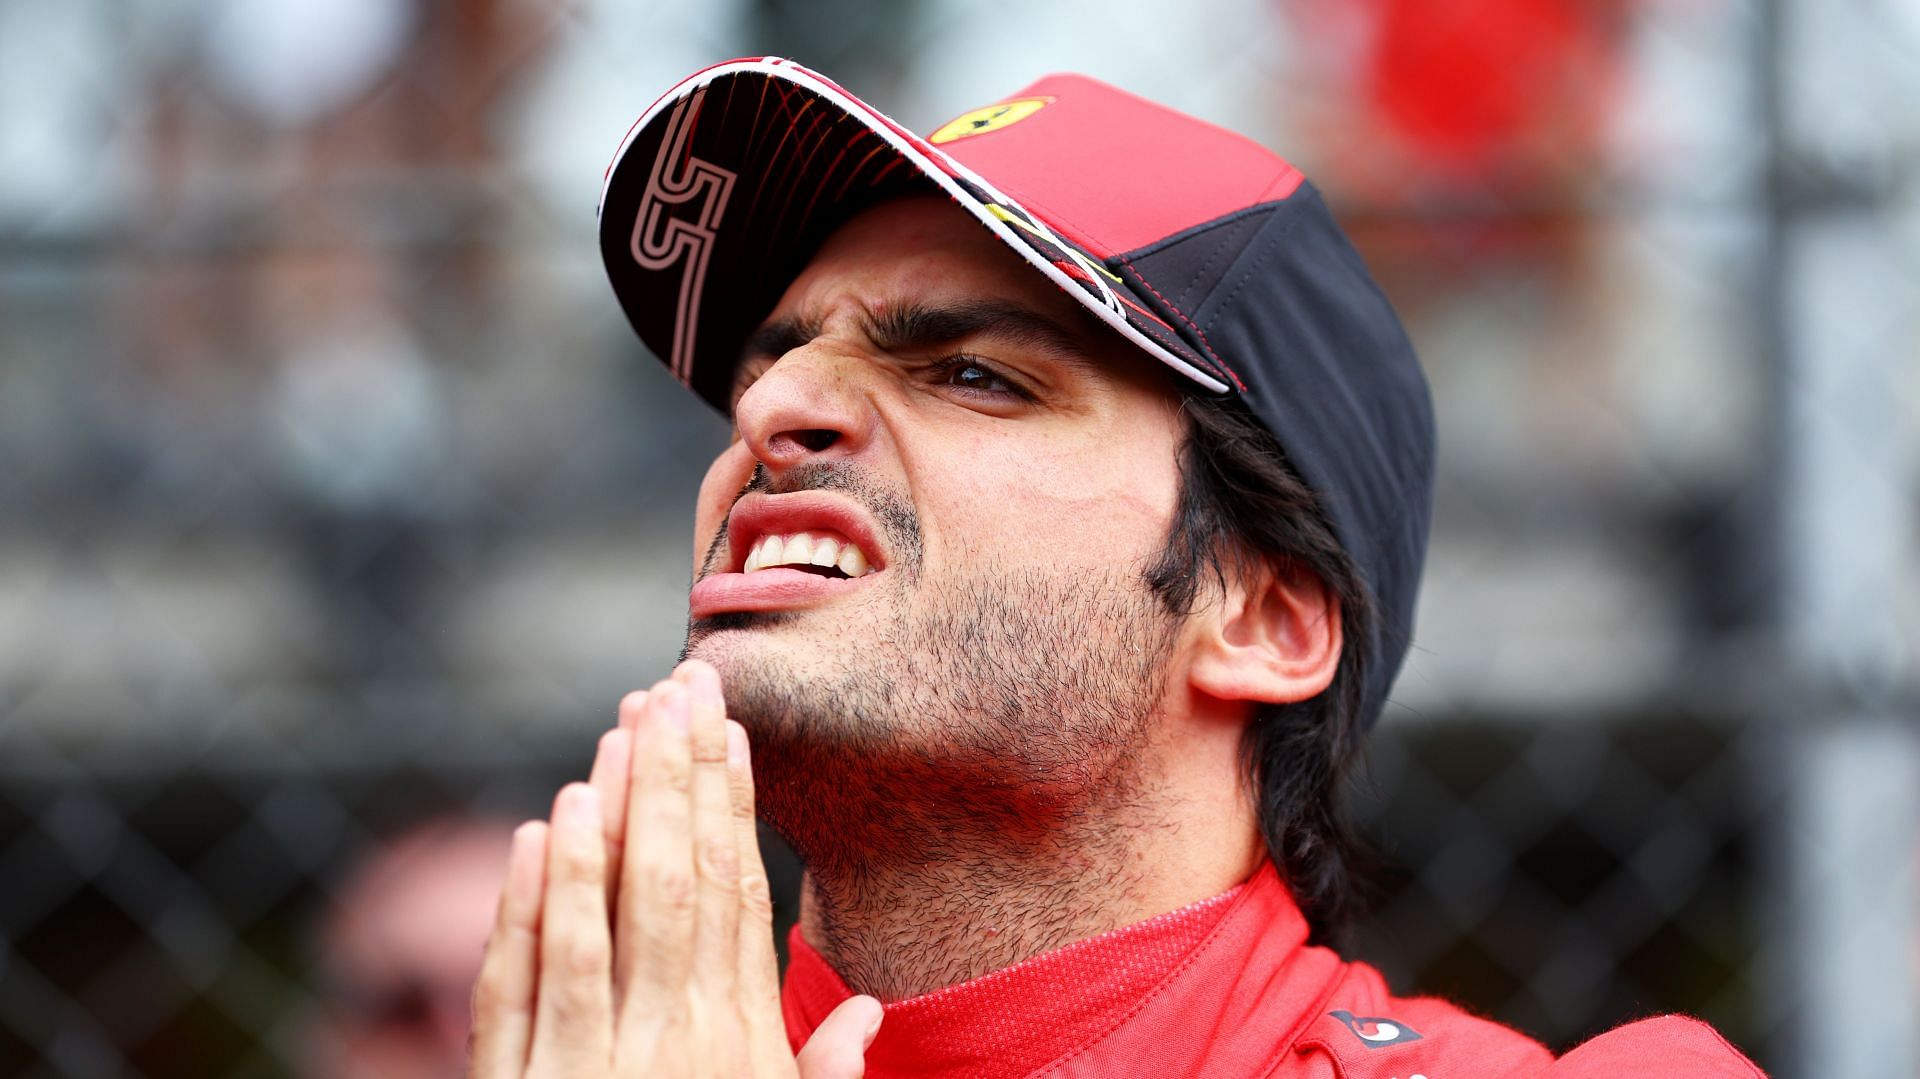 It was heartbreak for Sainz at the F1 Austrian GP